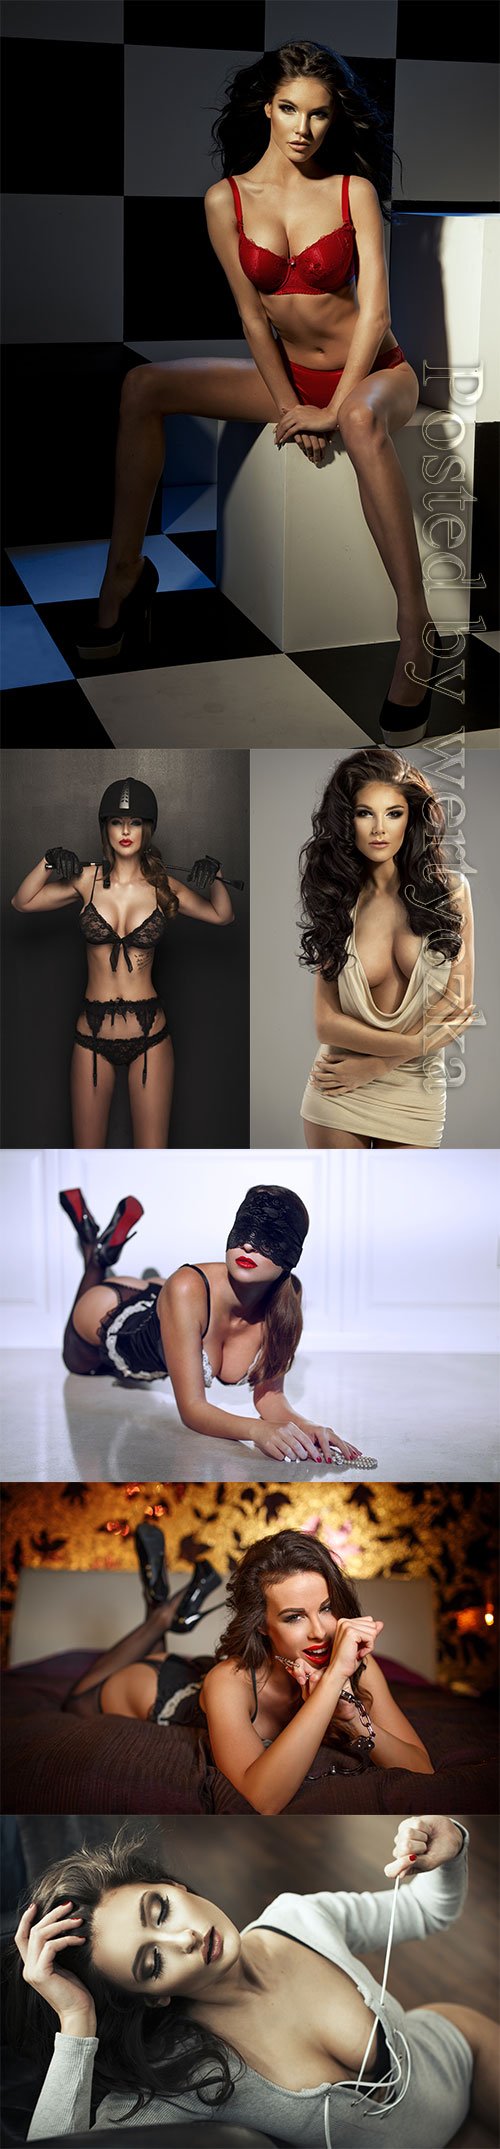 StockPhoto - Luxury Women In Lingerie Posing Vol 17